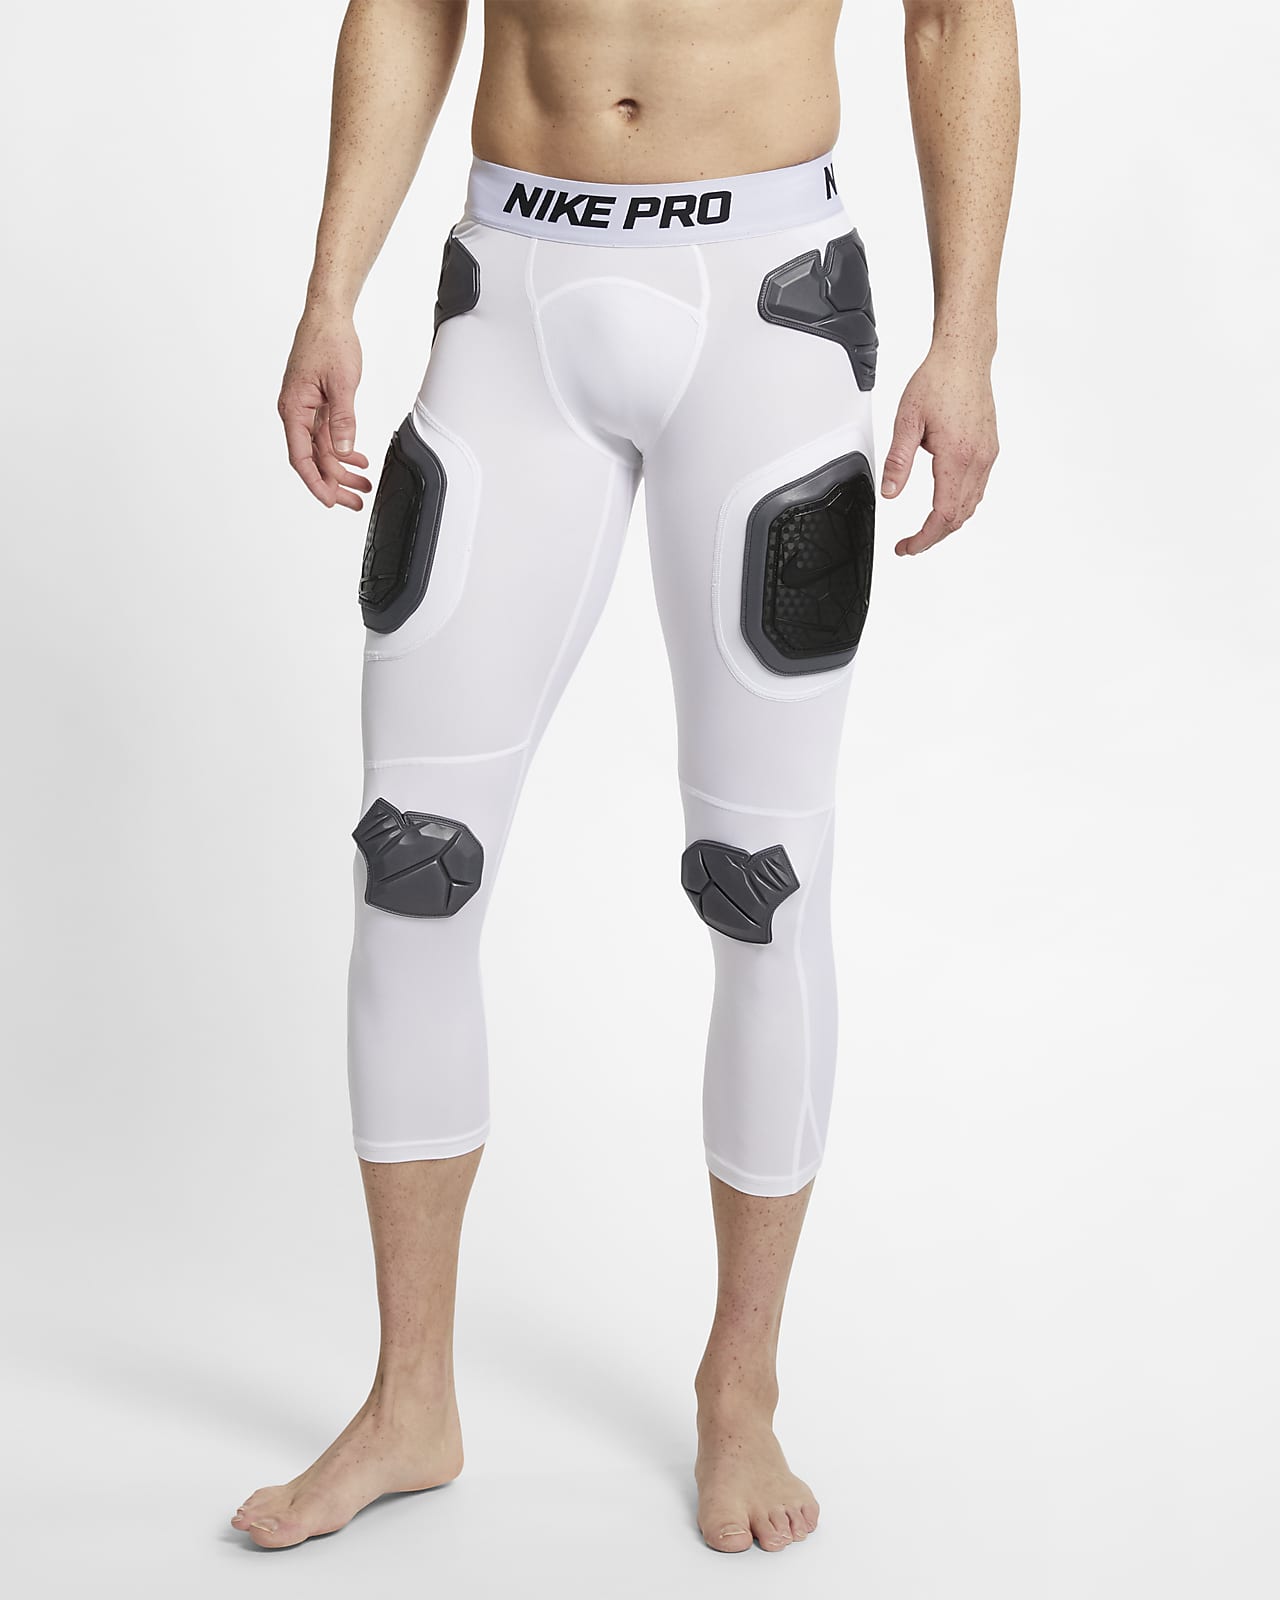 nike pro compression leggings